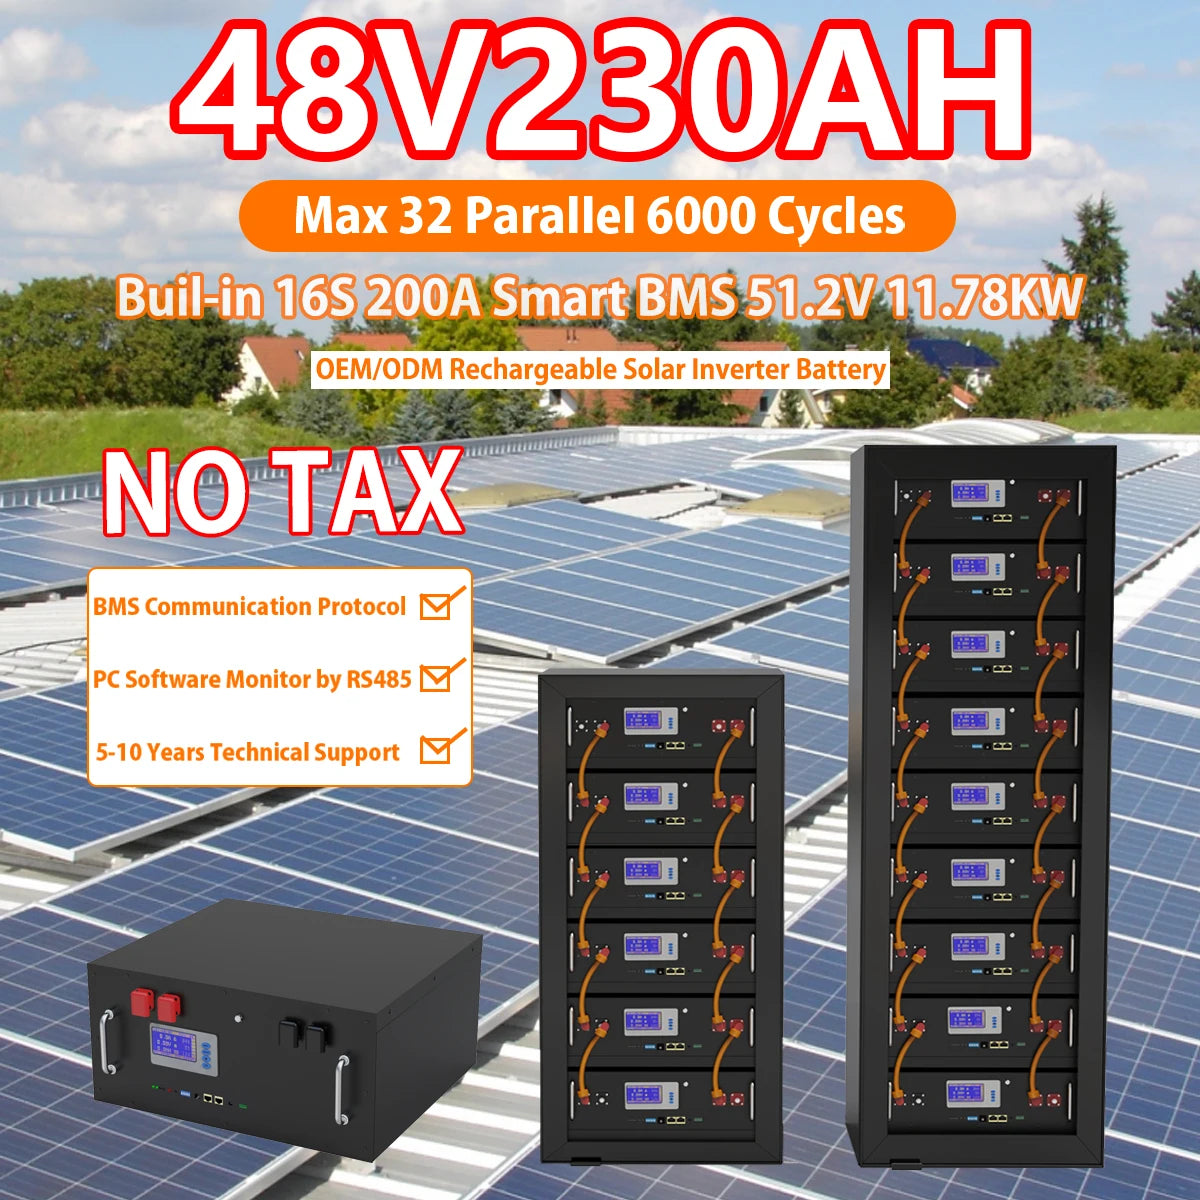 48V 230Ah 200Ah LiFePO4 Battery, 48V LiFePO4 battery pack with smart BMS for solar inverter applications.